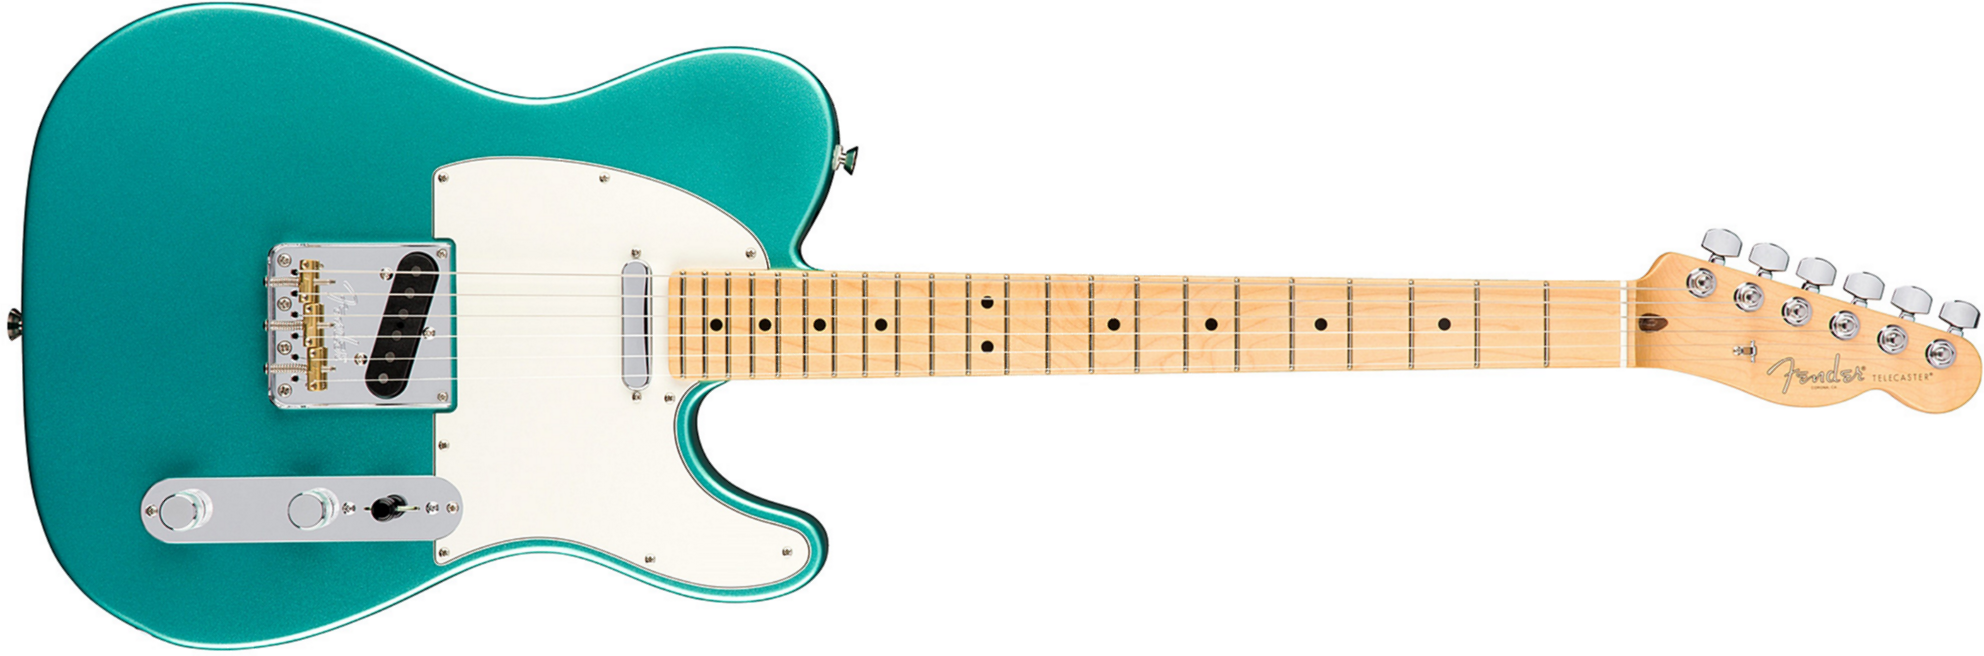 Fender Tele American Professional 2s Usa Mn - Mystic Seafoam - Tel shape electric guitar - Main picture